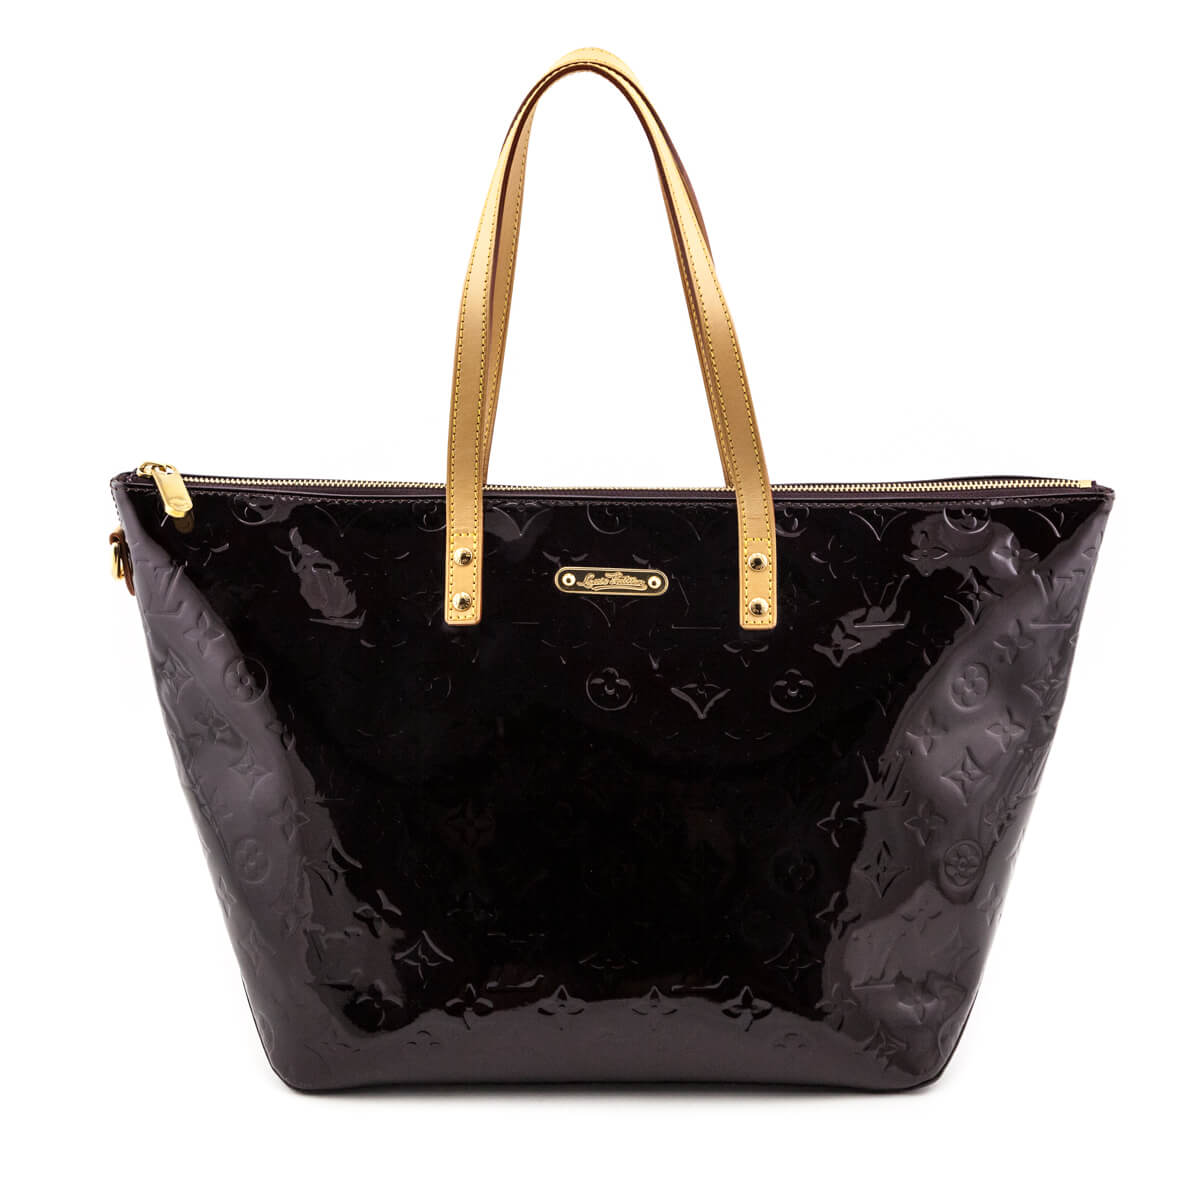 Sold at Auction: Louis Vuitton Amarante Monogram Vernis Summit Drive Handbag